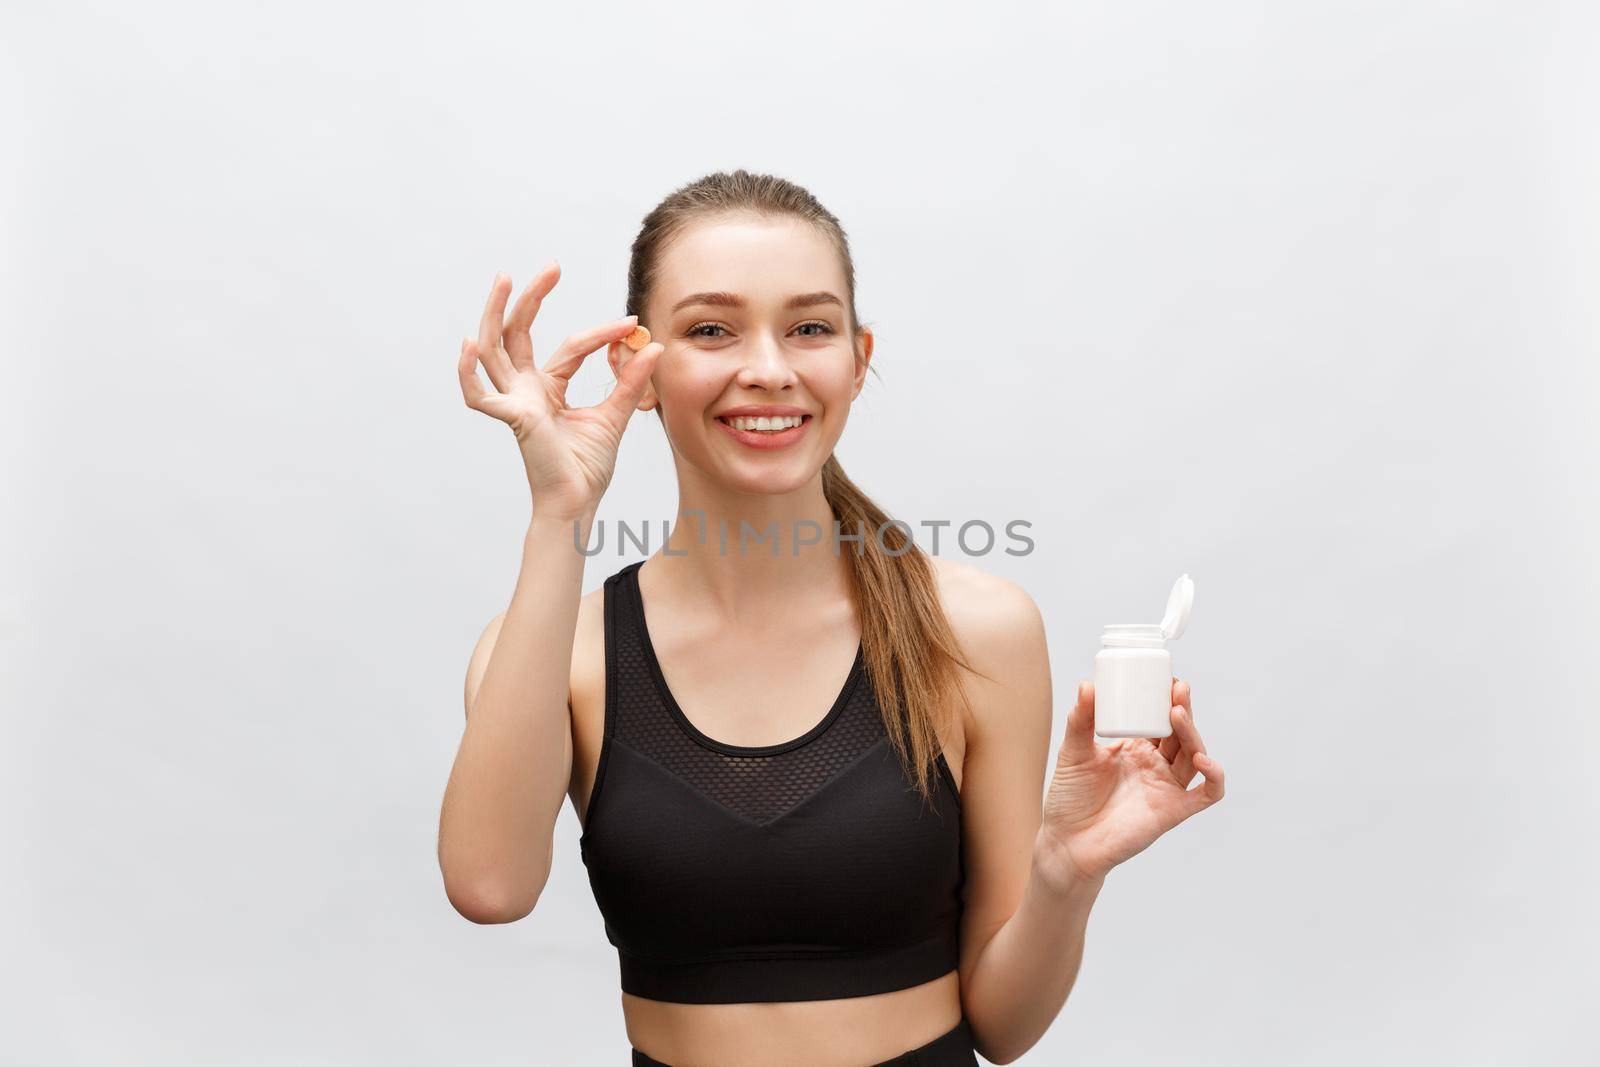 Smiling blonde sport woman holding bottle of medicine on white background.